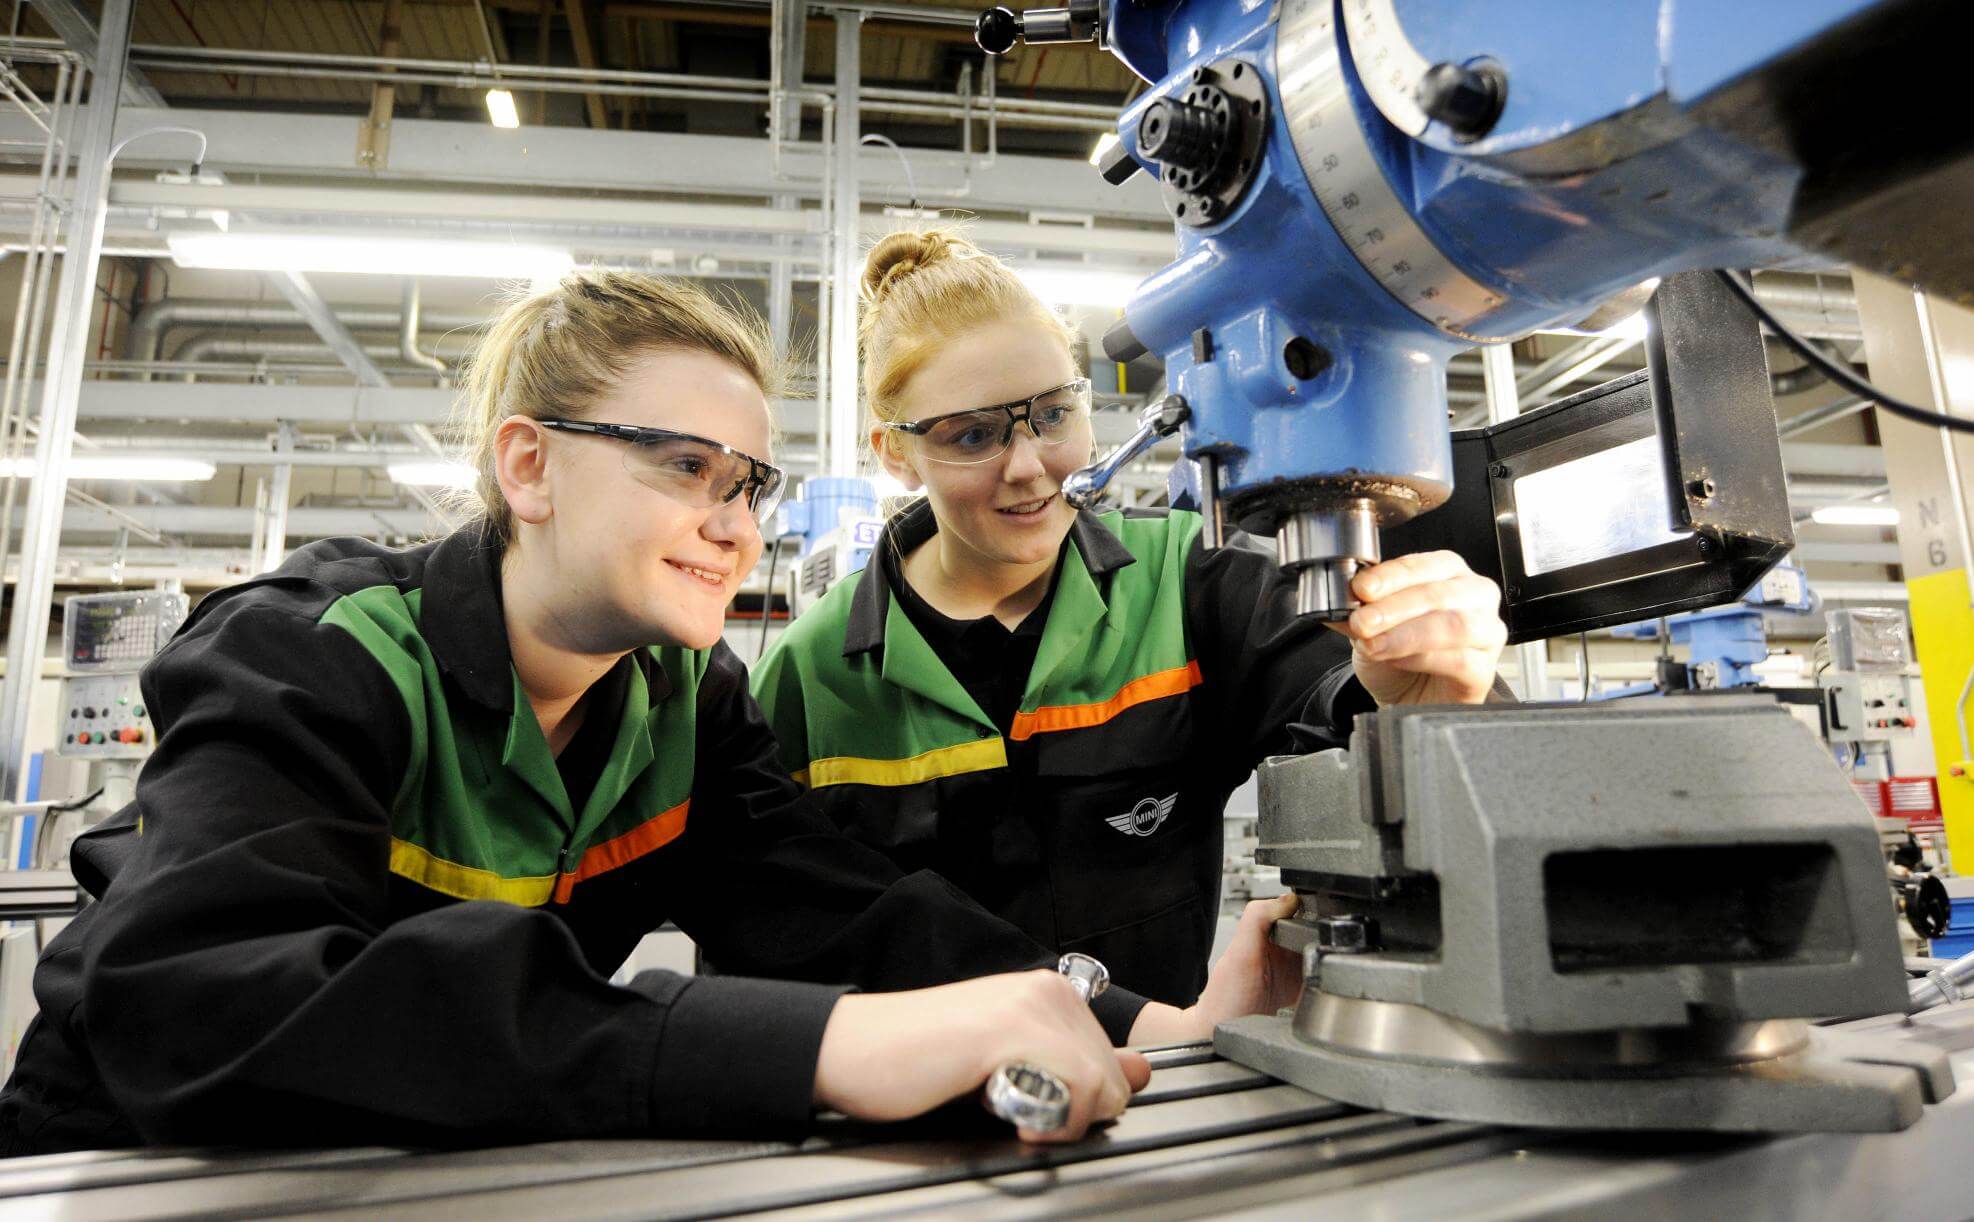 BMW apprenticeship Anwyl Partnerships